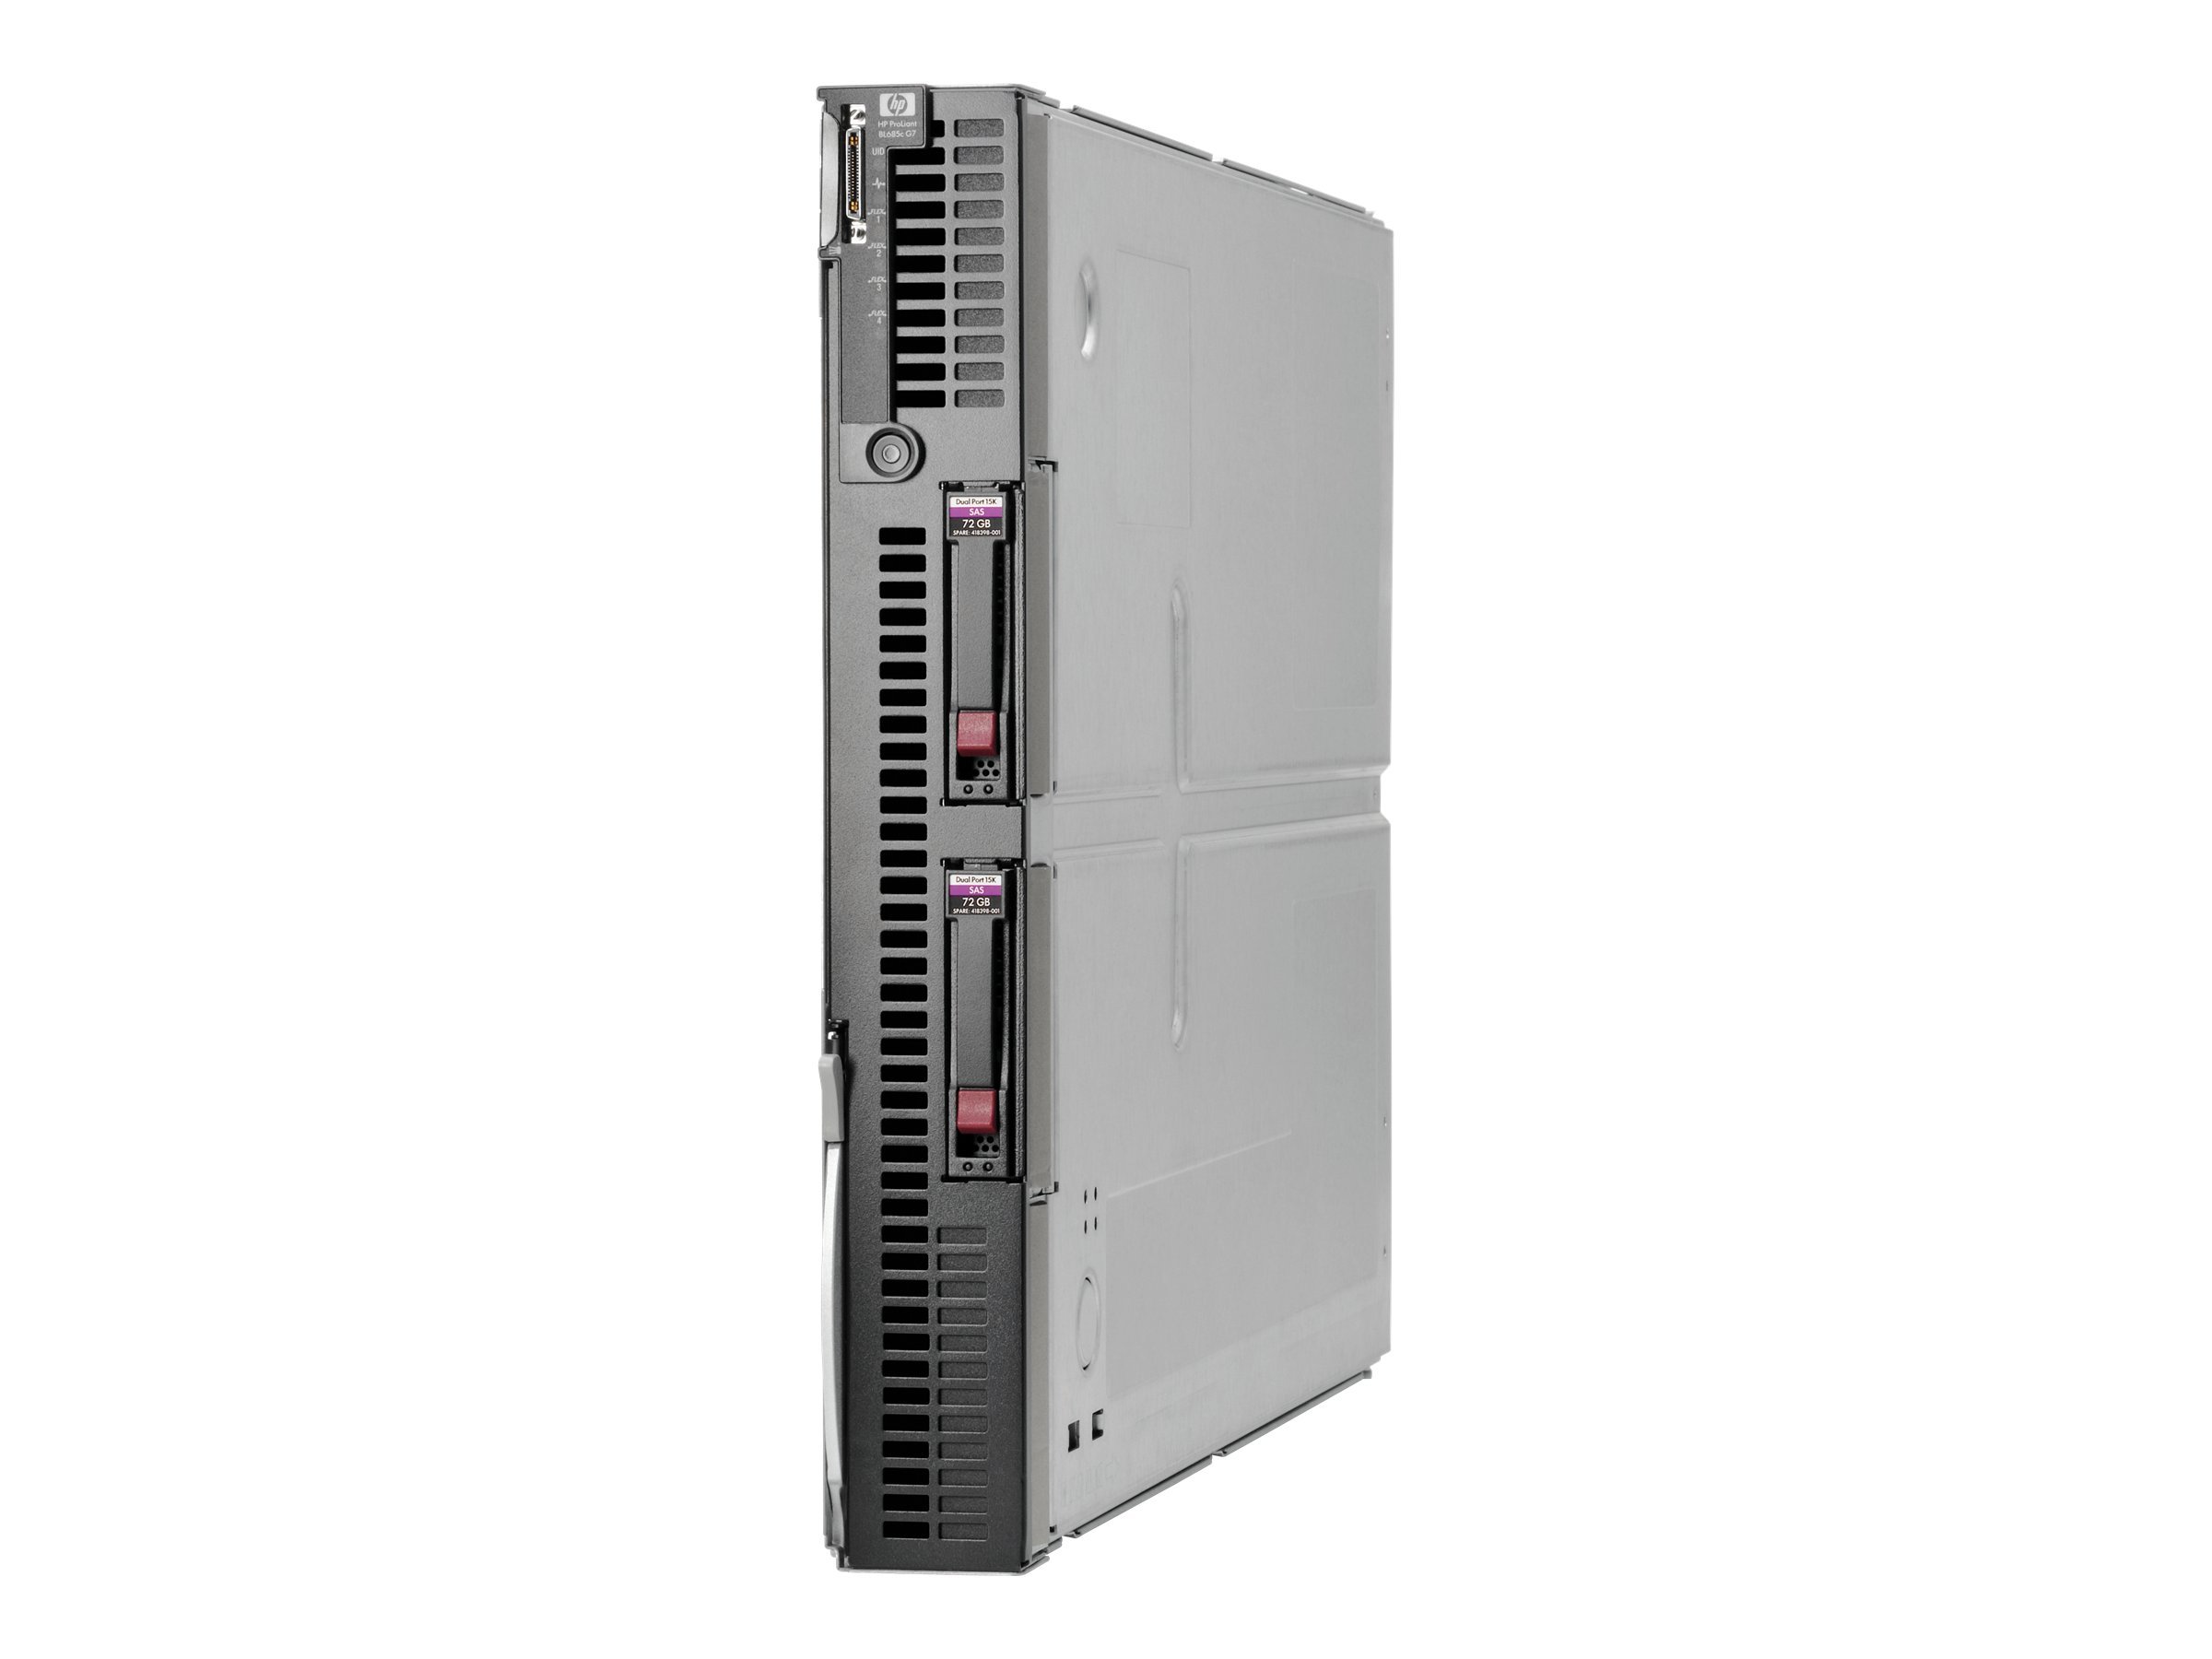 HPE ProLiant BL685c G7 - Server (518878-B21)